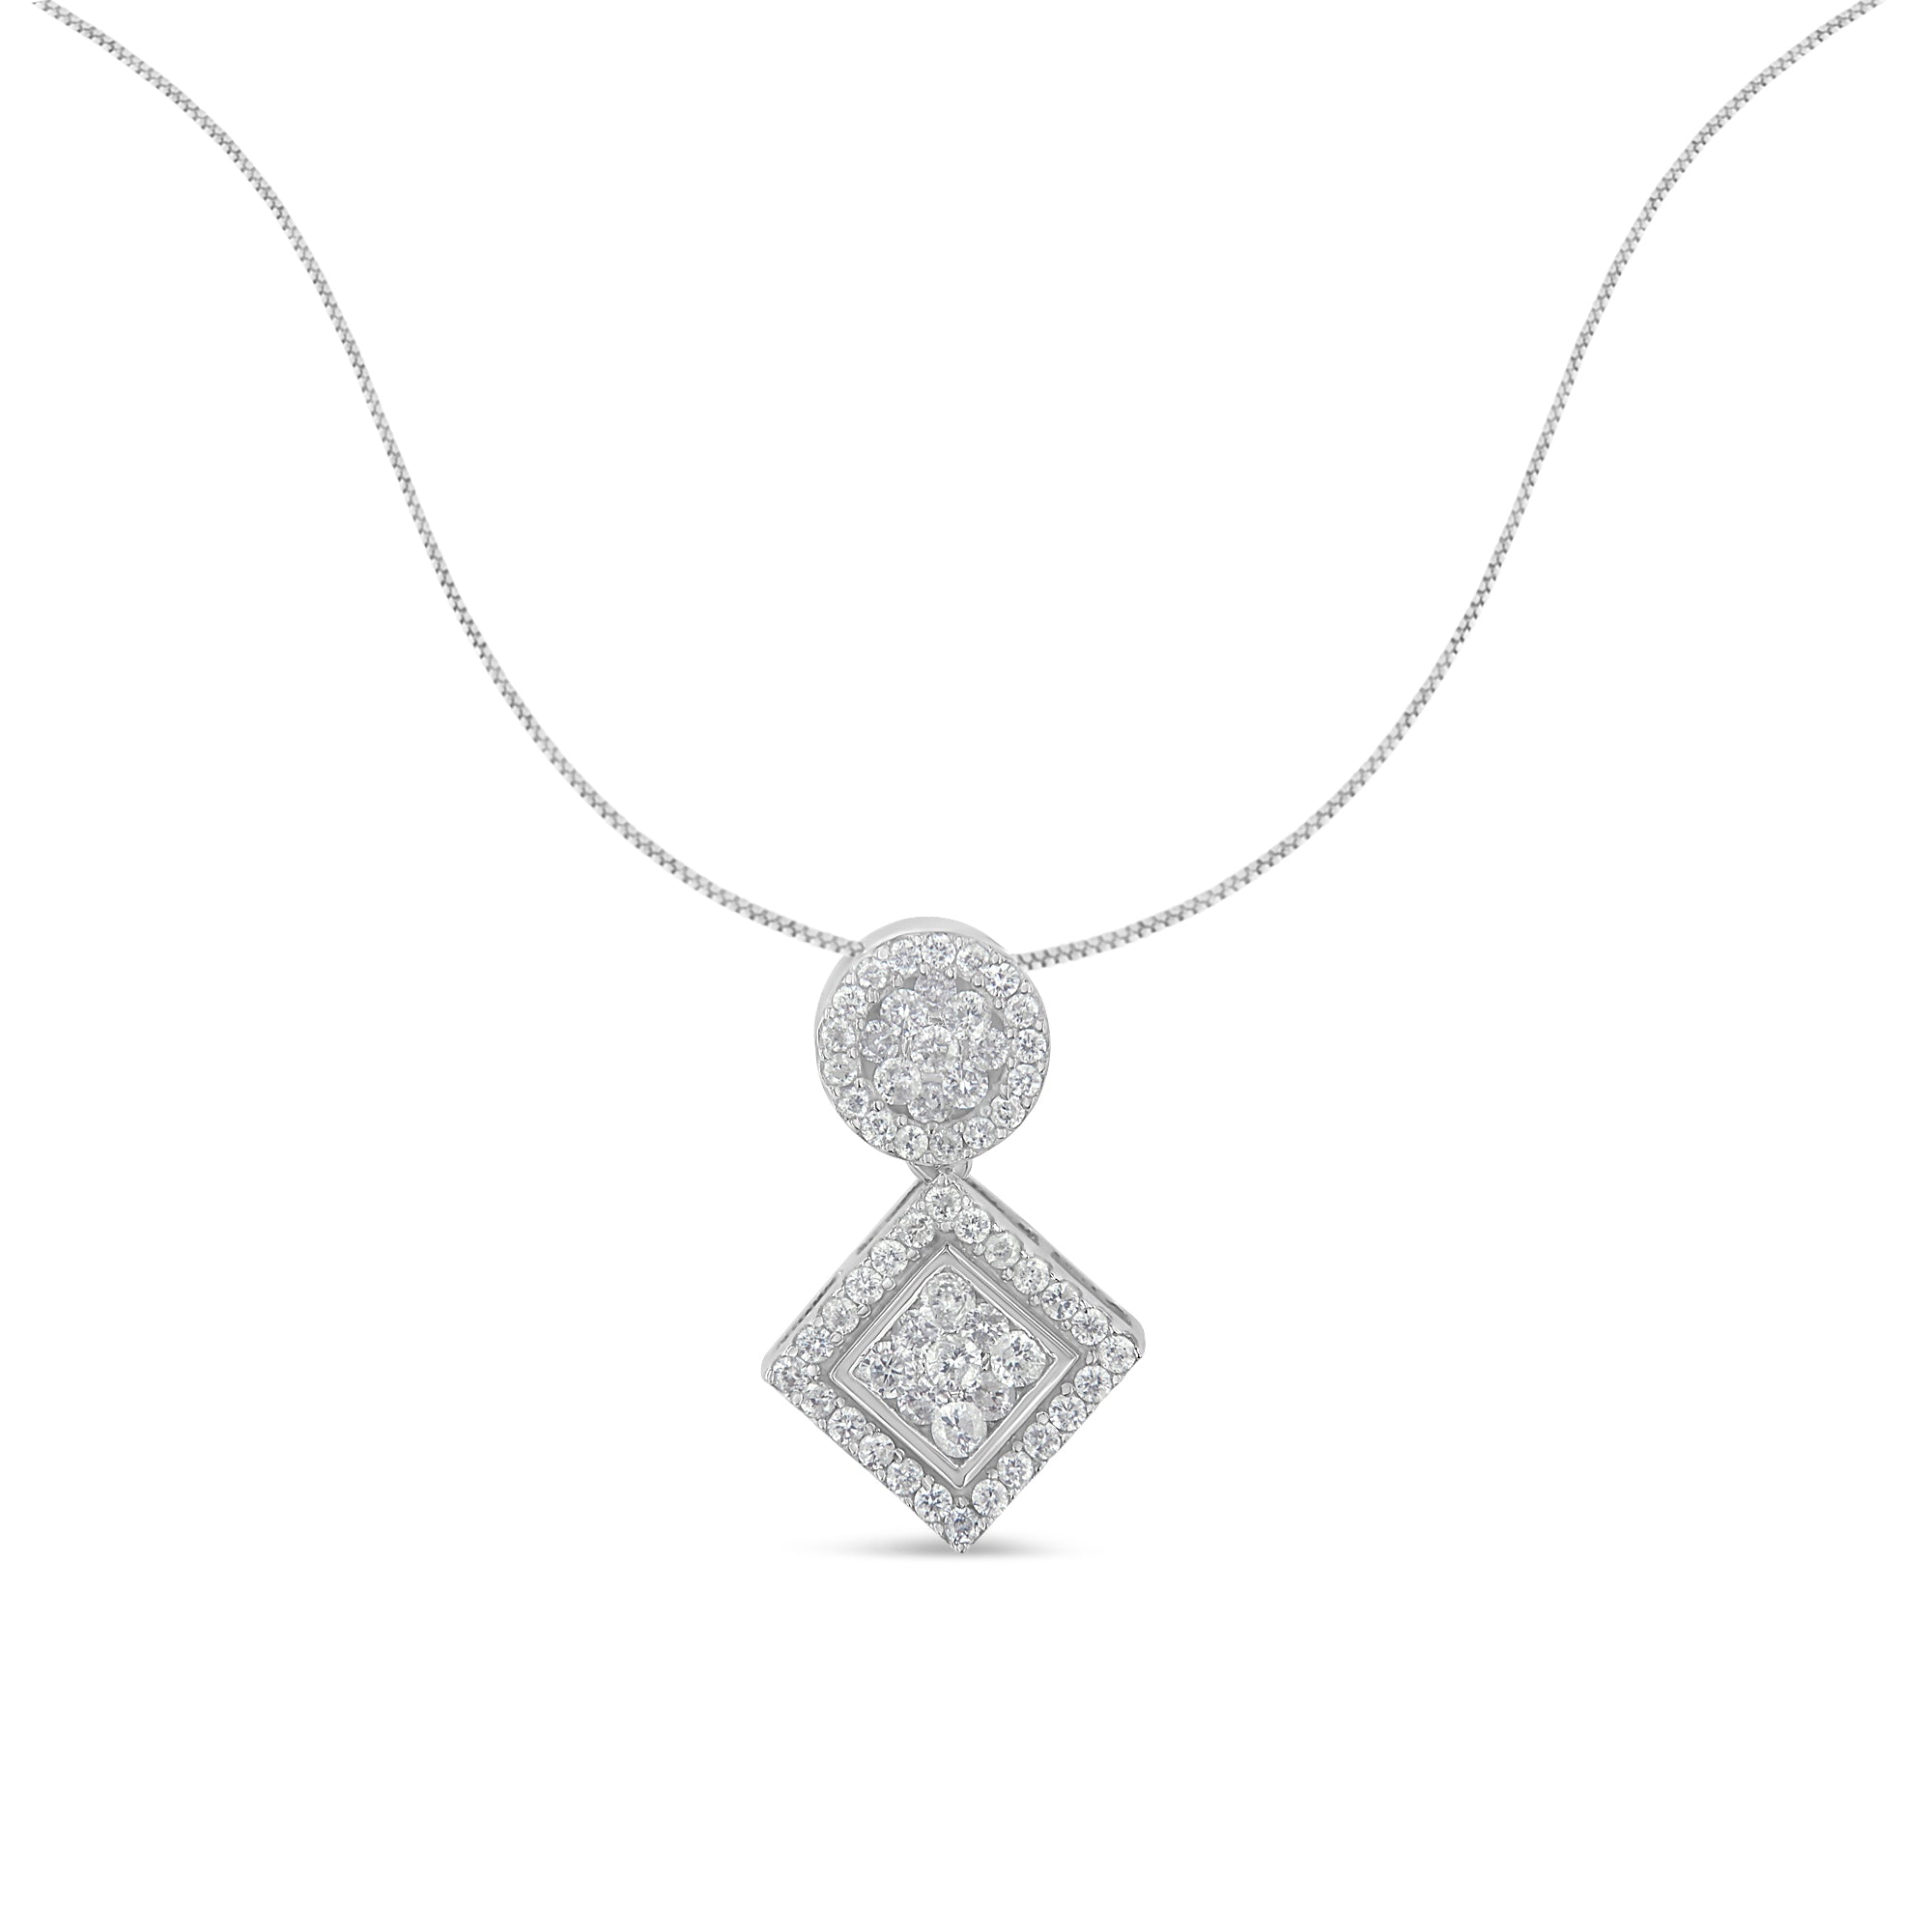 14K White Gold 1 cttw Diamond Pendant Necklace